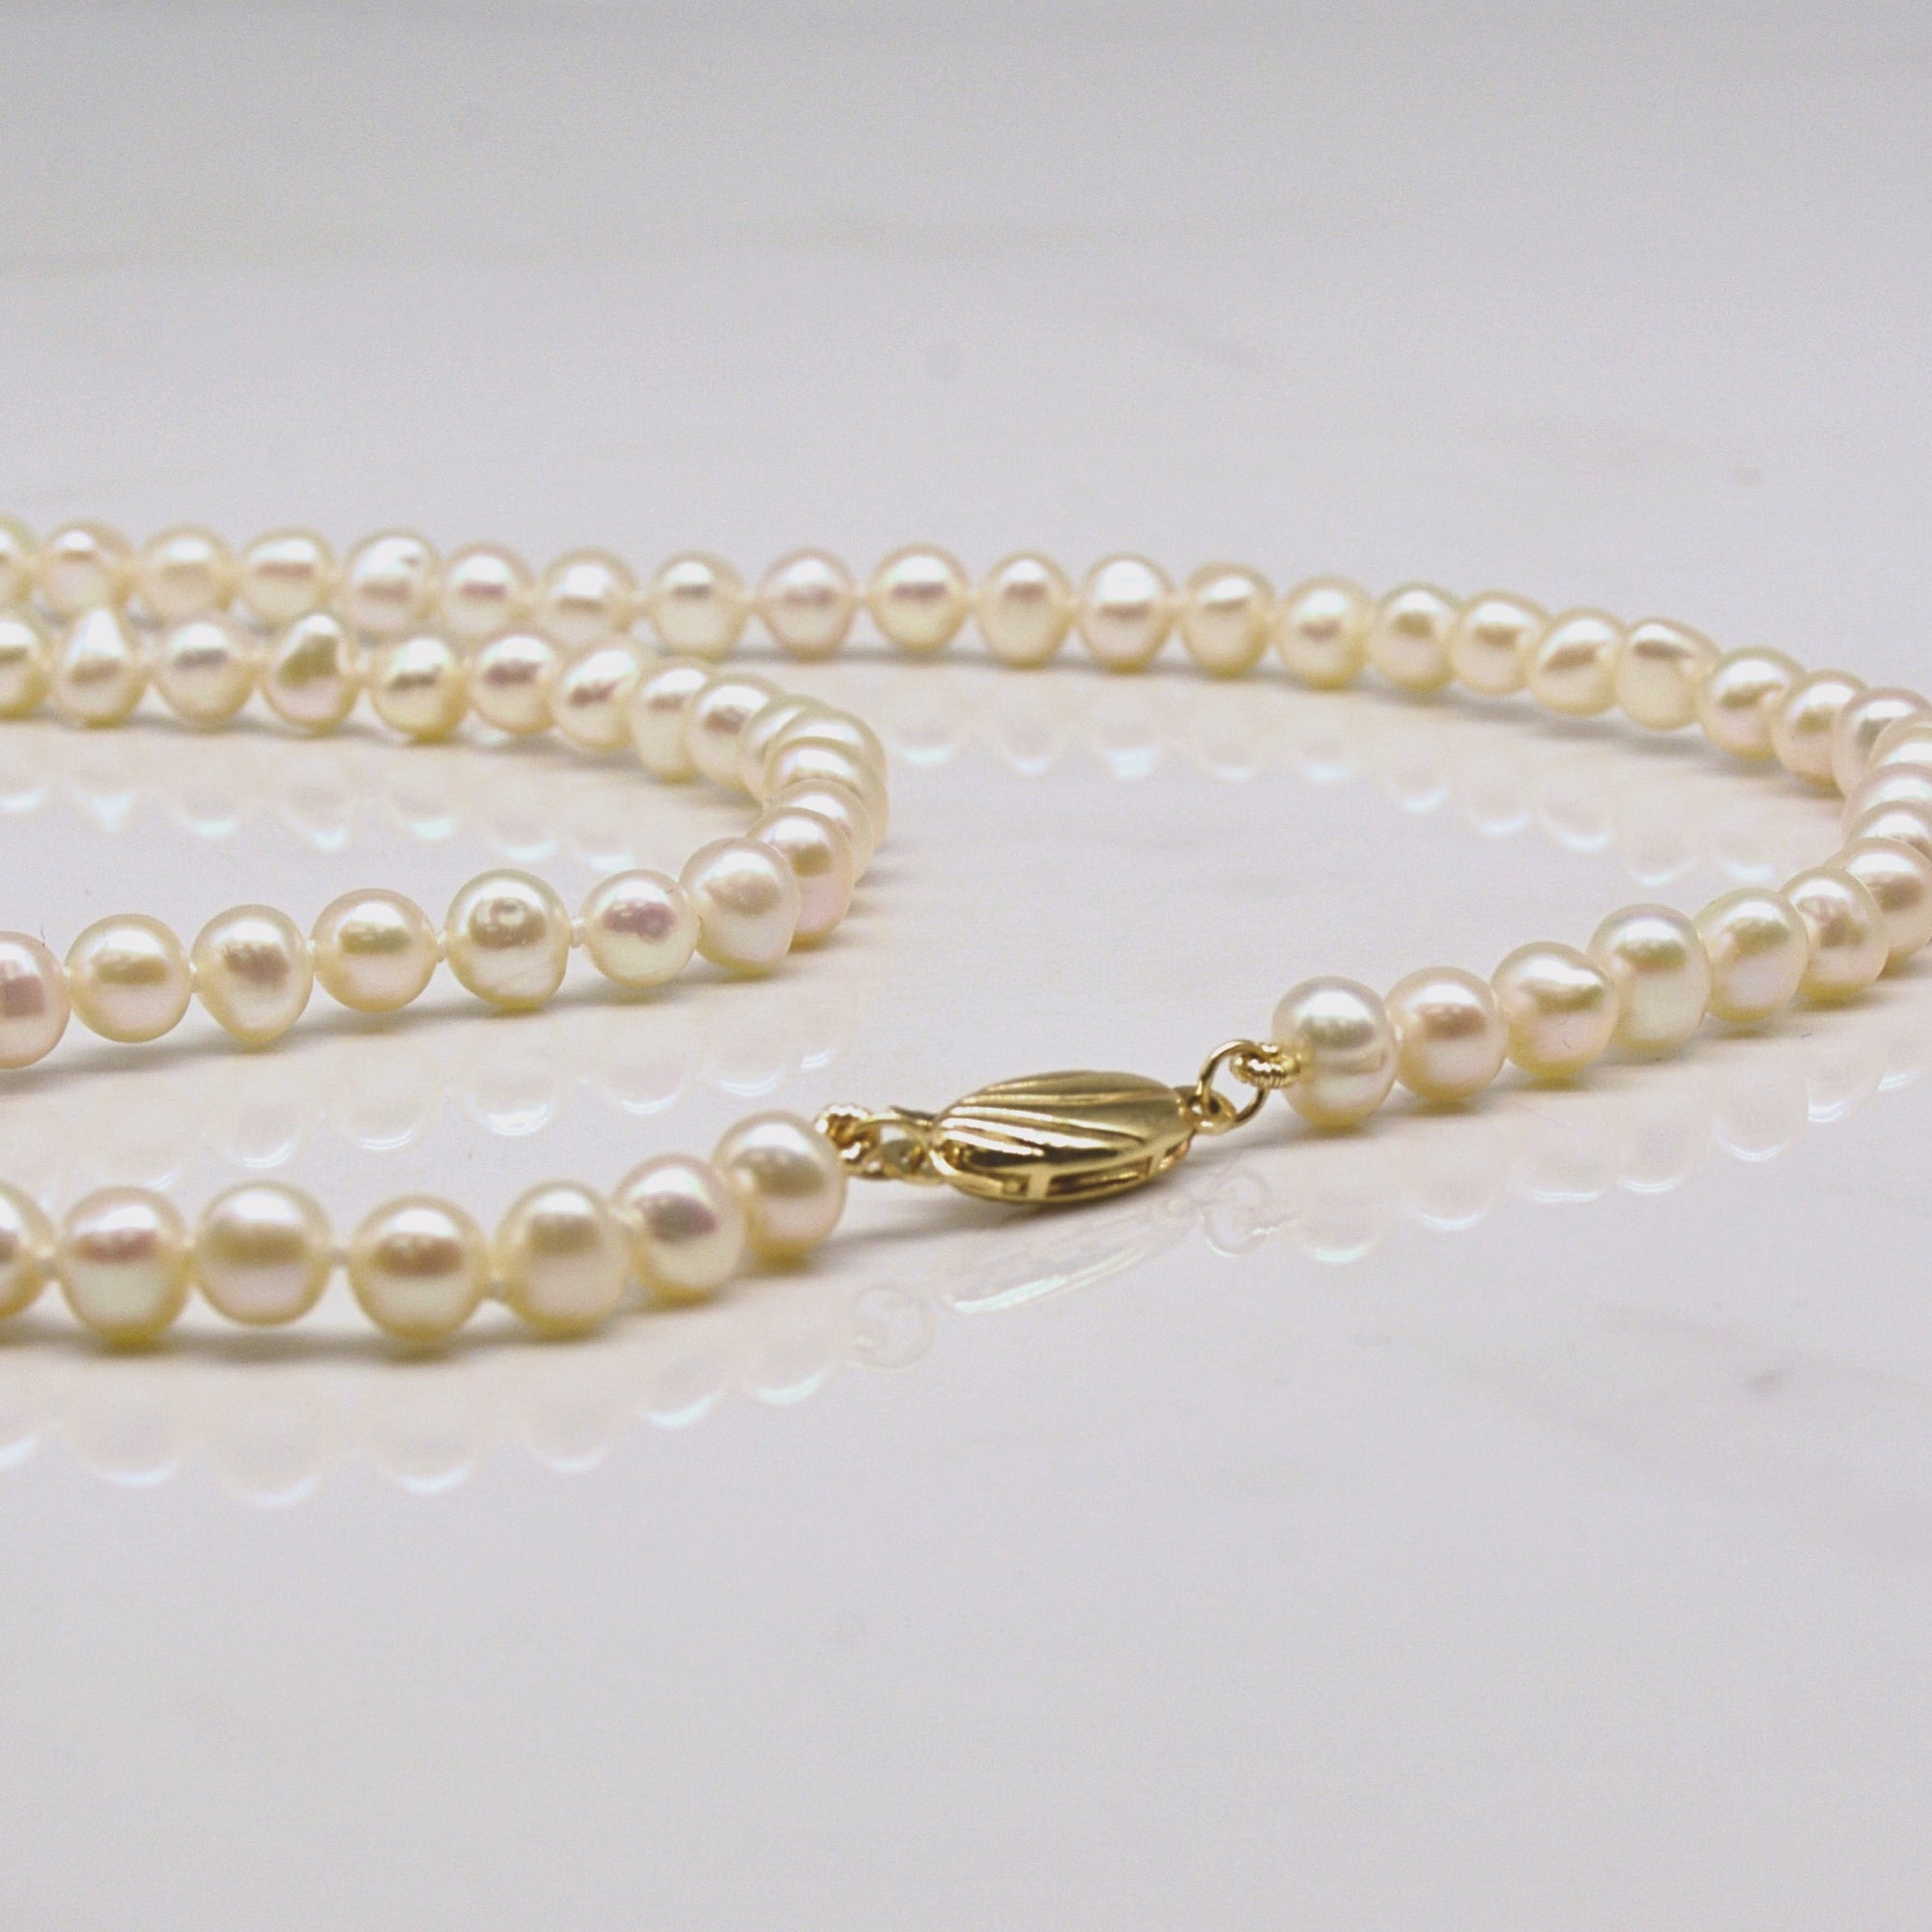 'Bespoke' Panache Pearl Necklace | 18